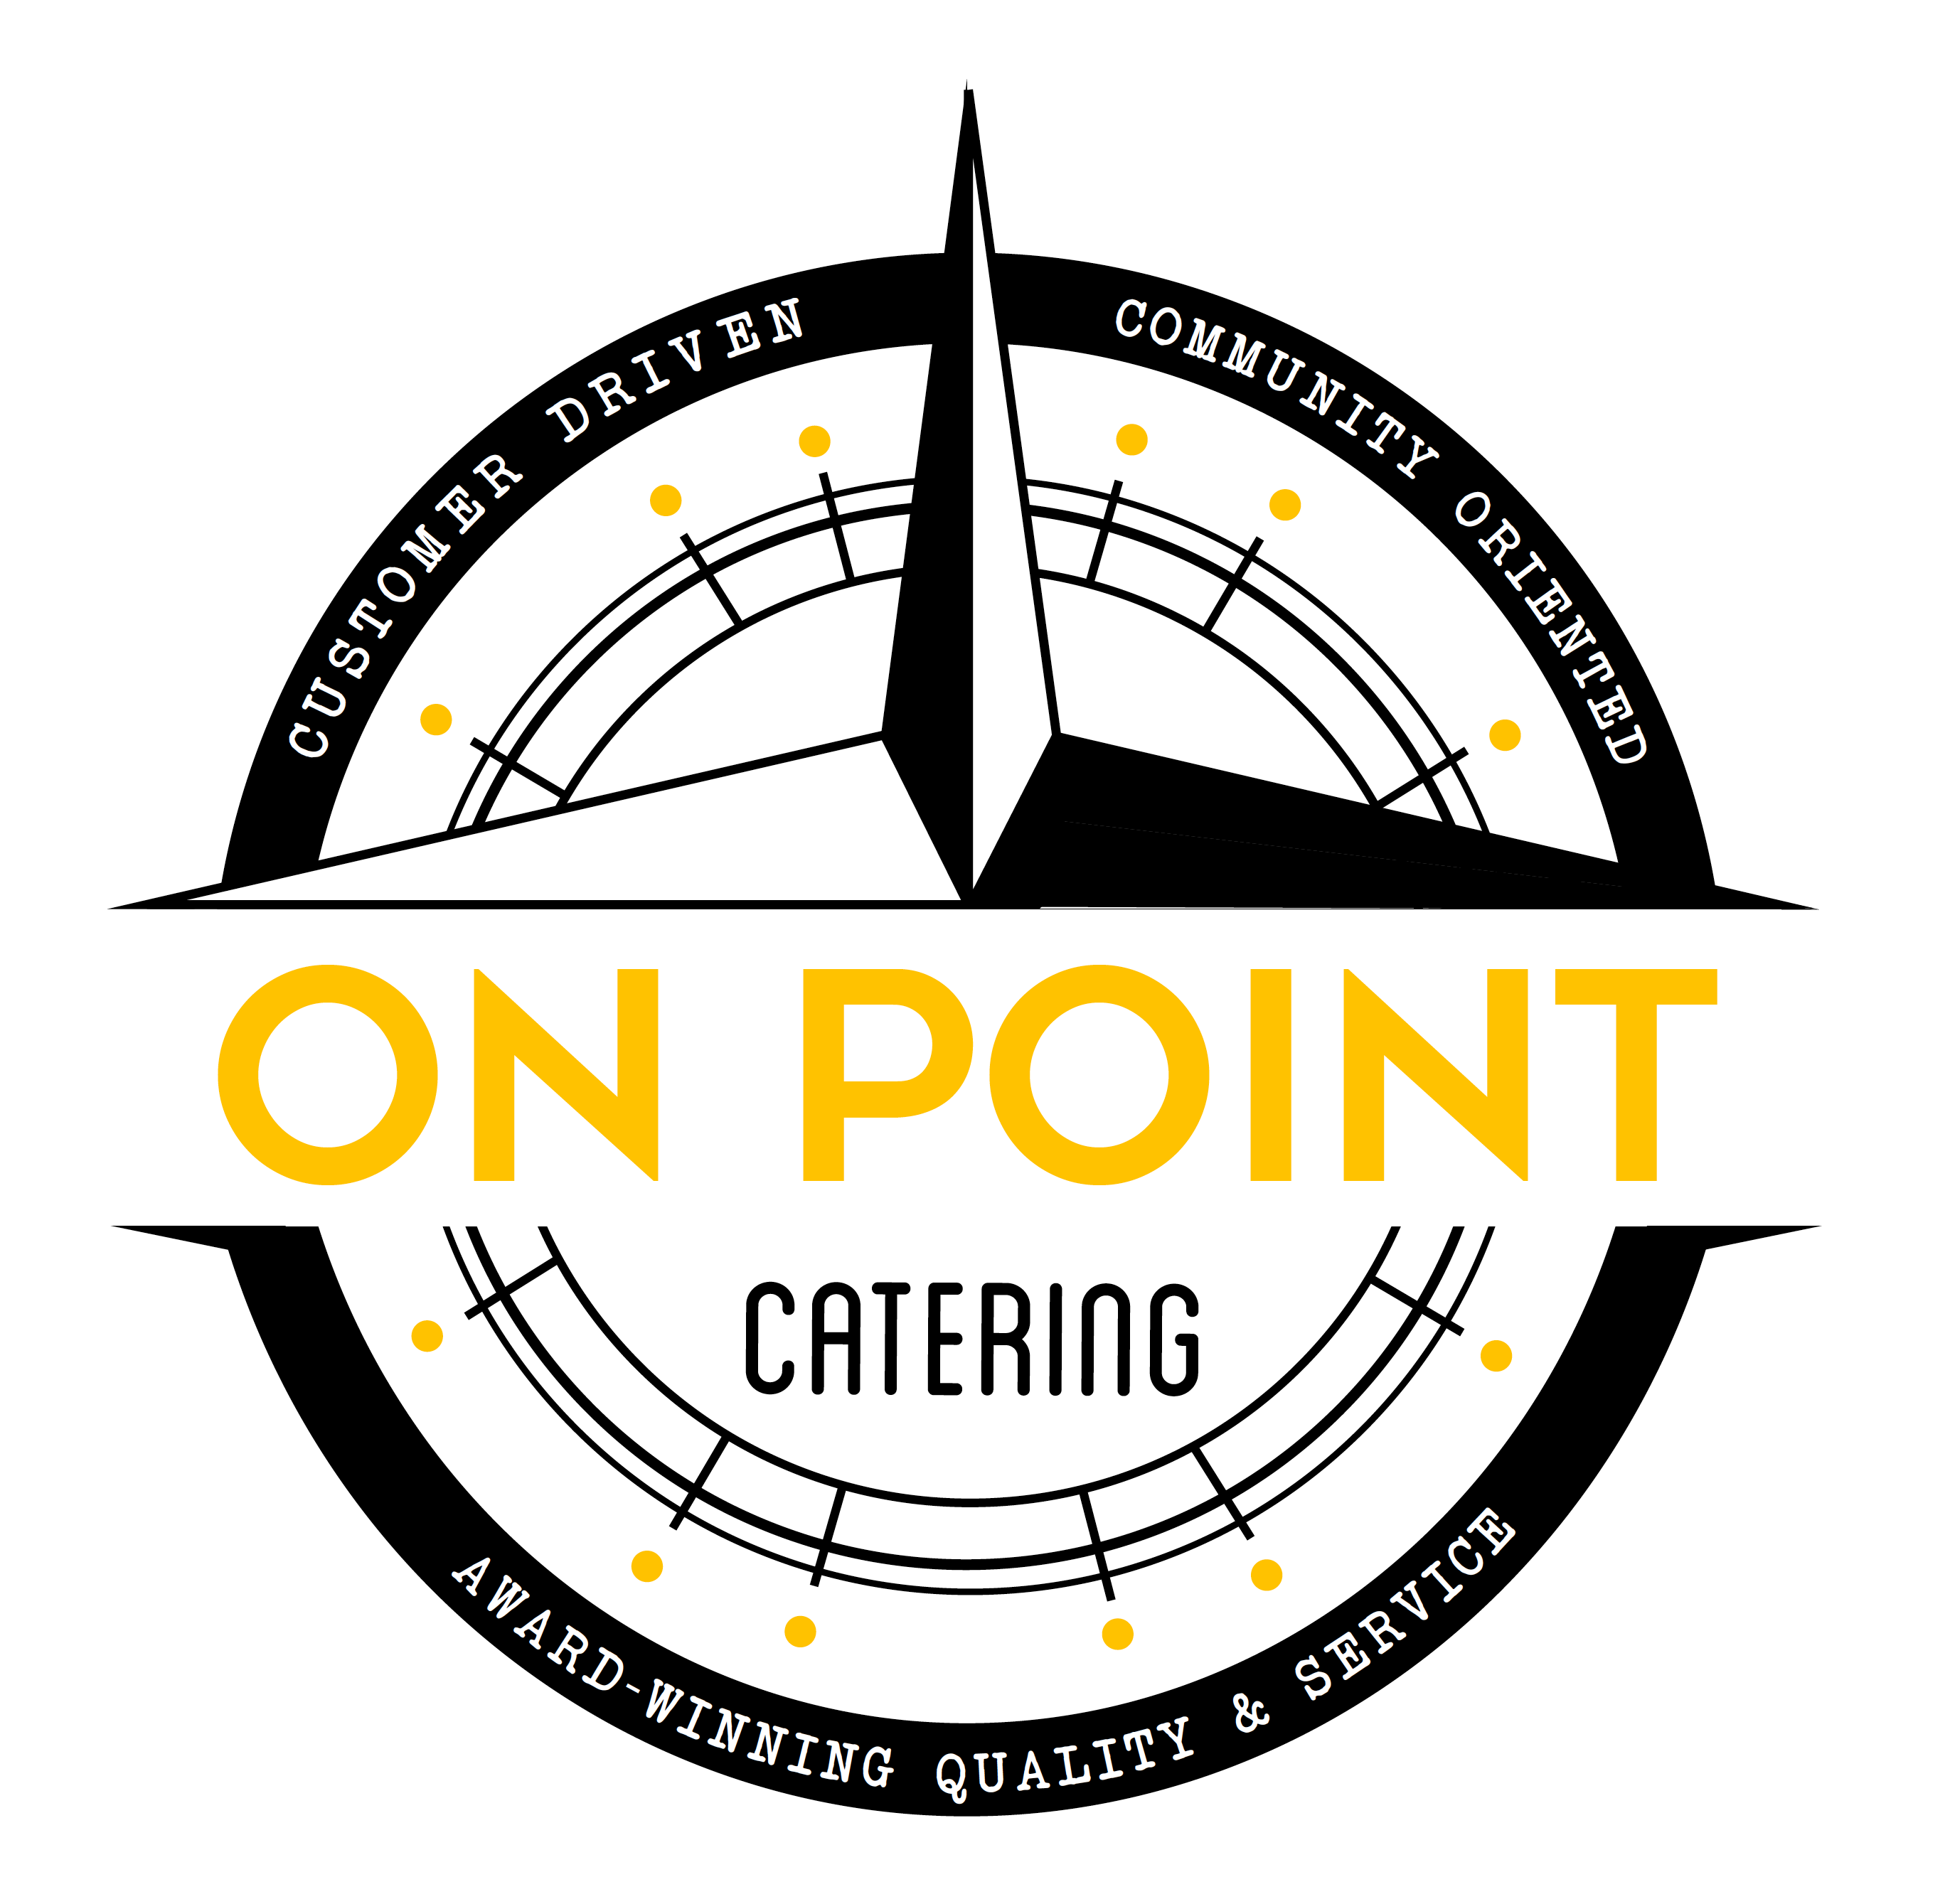 ON POINT Catering logo.jpg